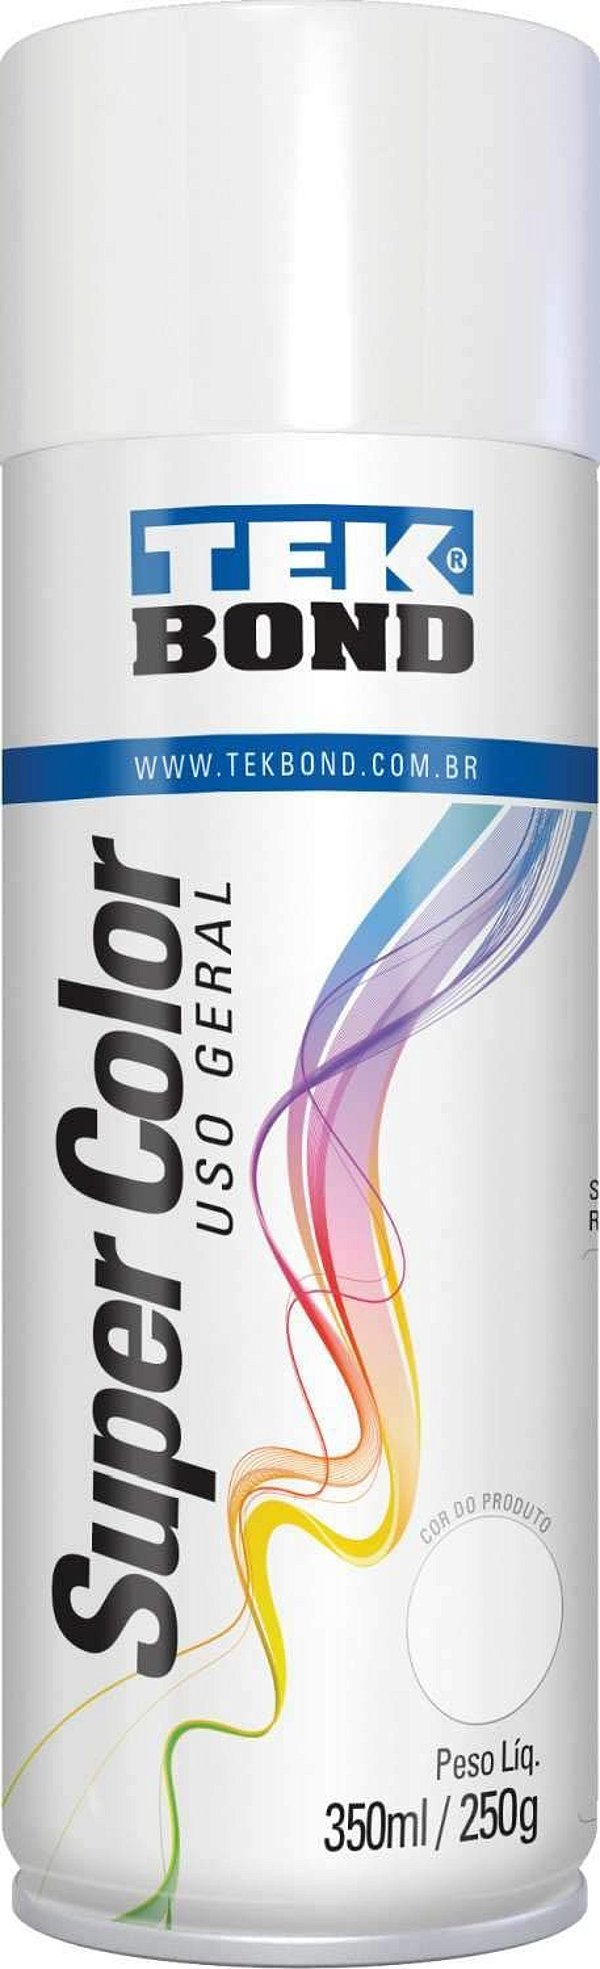 Tinta Spray 350ml Supercolor Bco Brilho - Tekbond